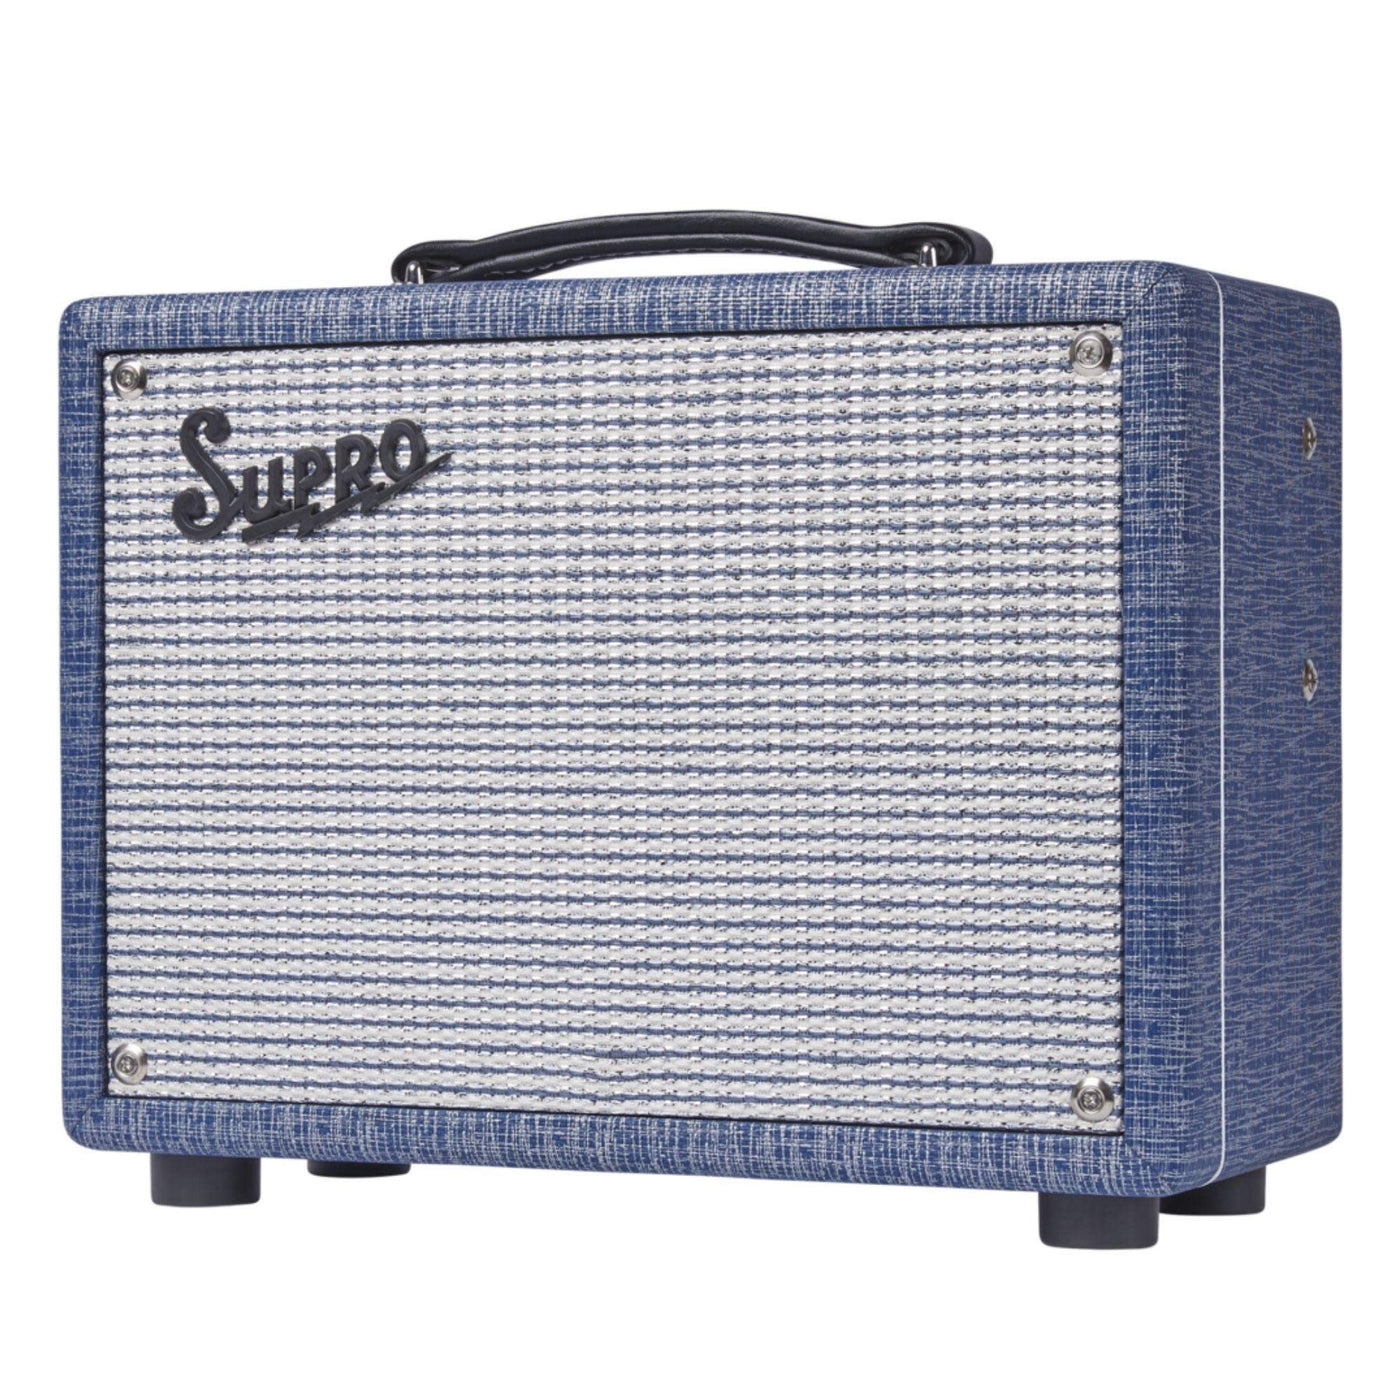 Supro 1606J ’64 Super Tube Guitar Combo Amplifier